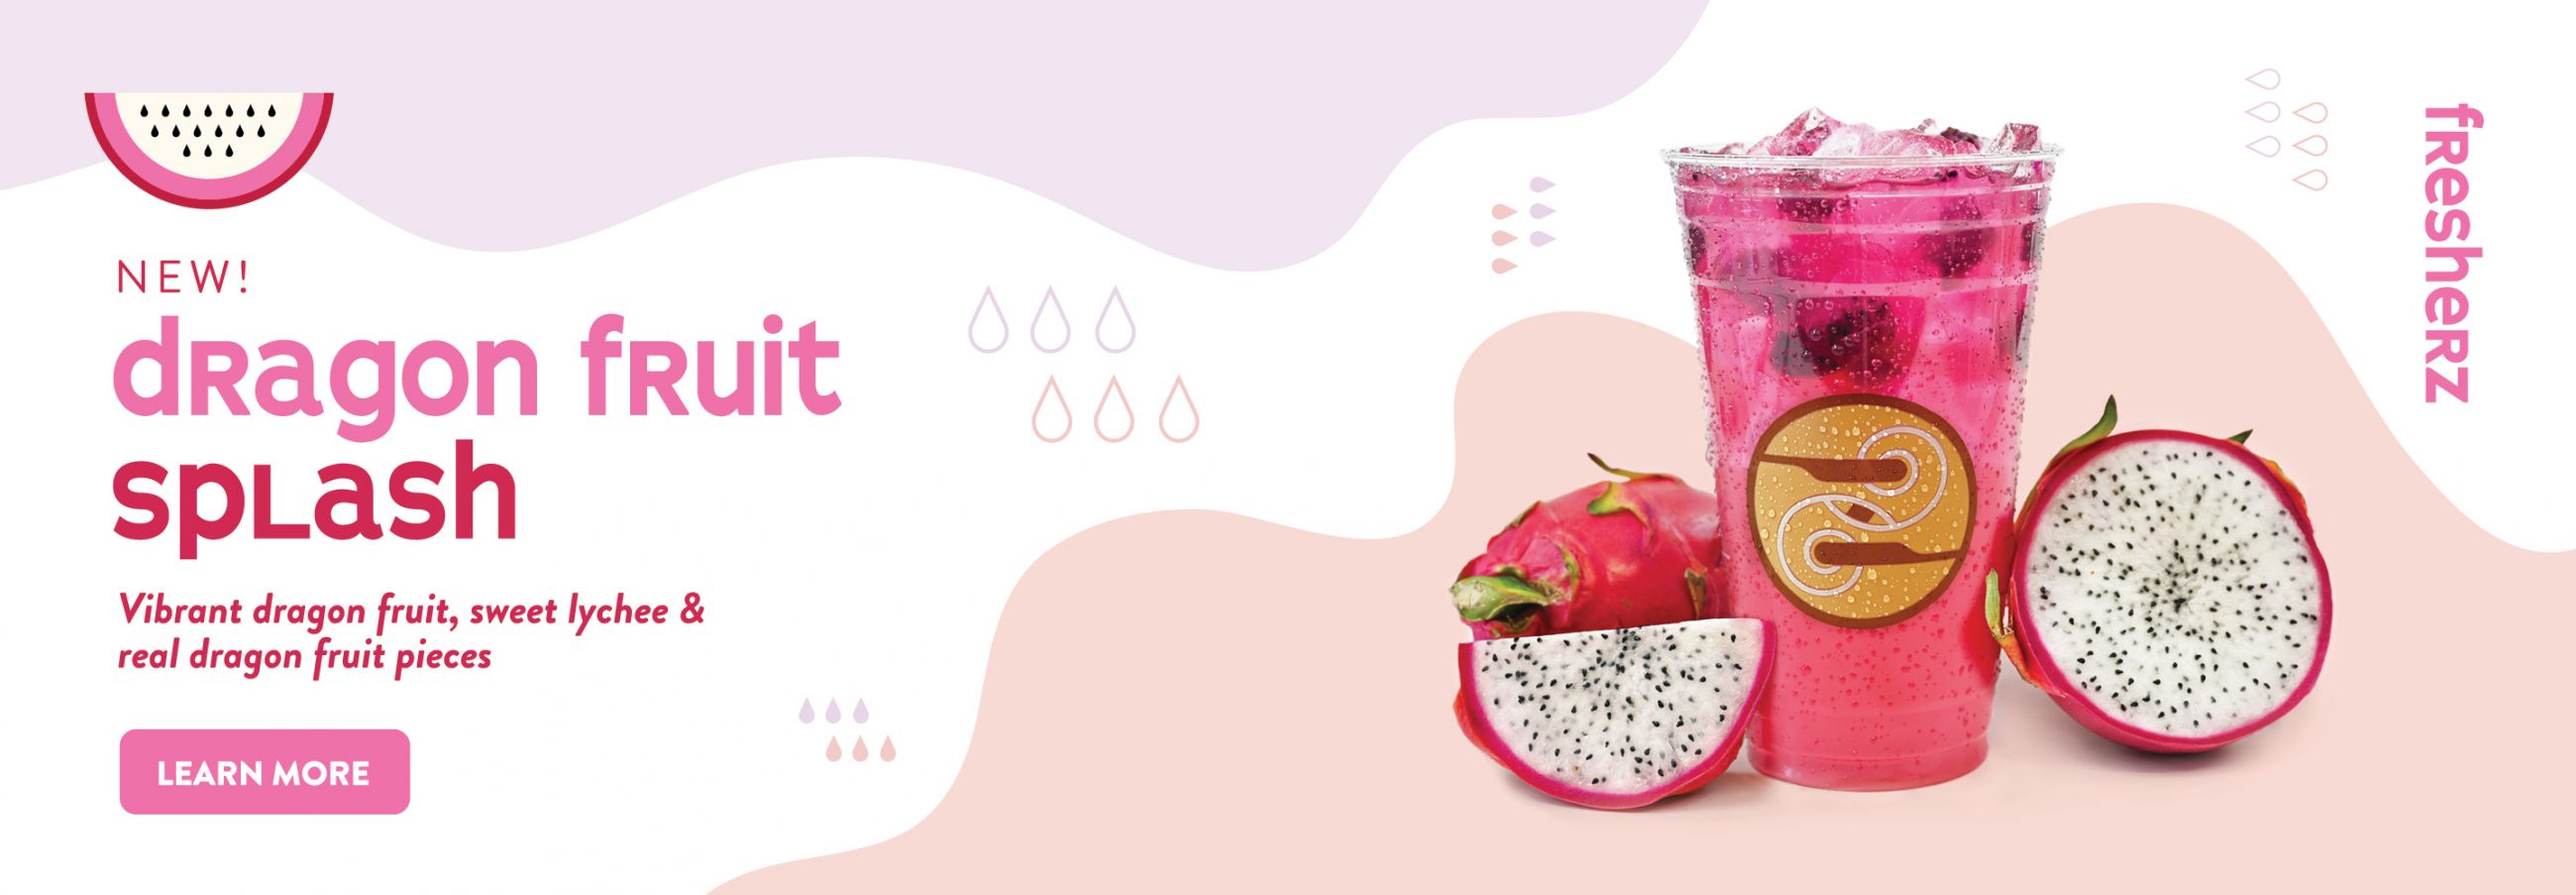 Dragon Fruit Splash Fresherz at Ziggi's! Click to learn more!